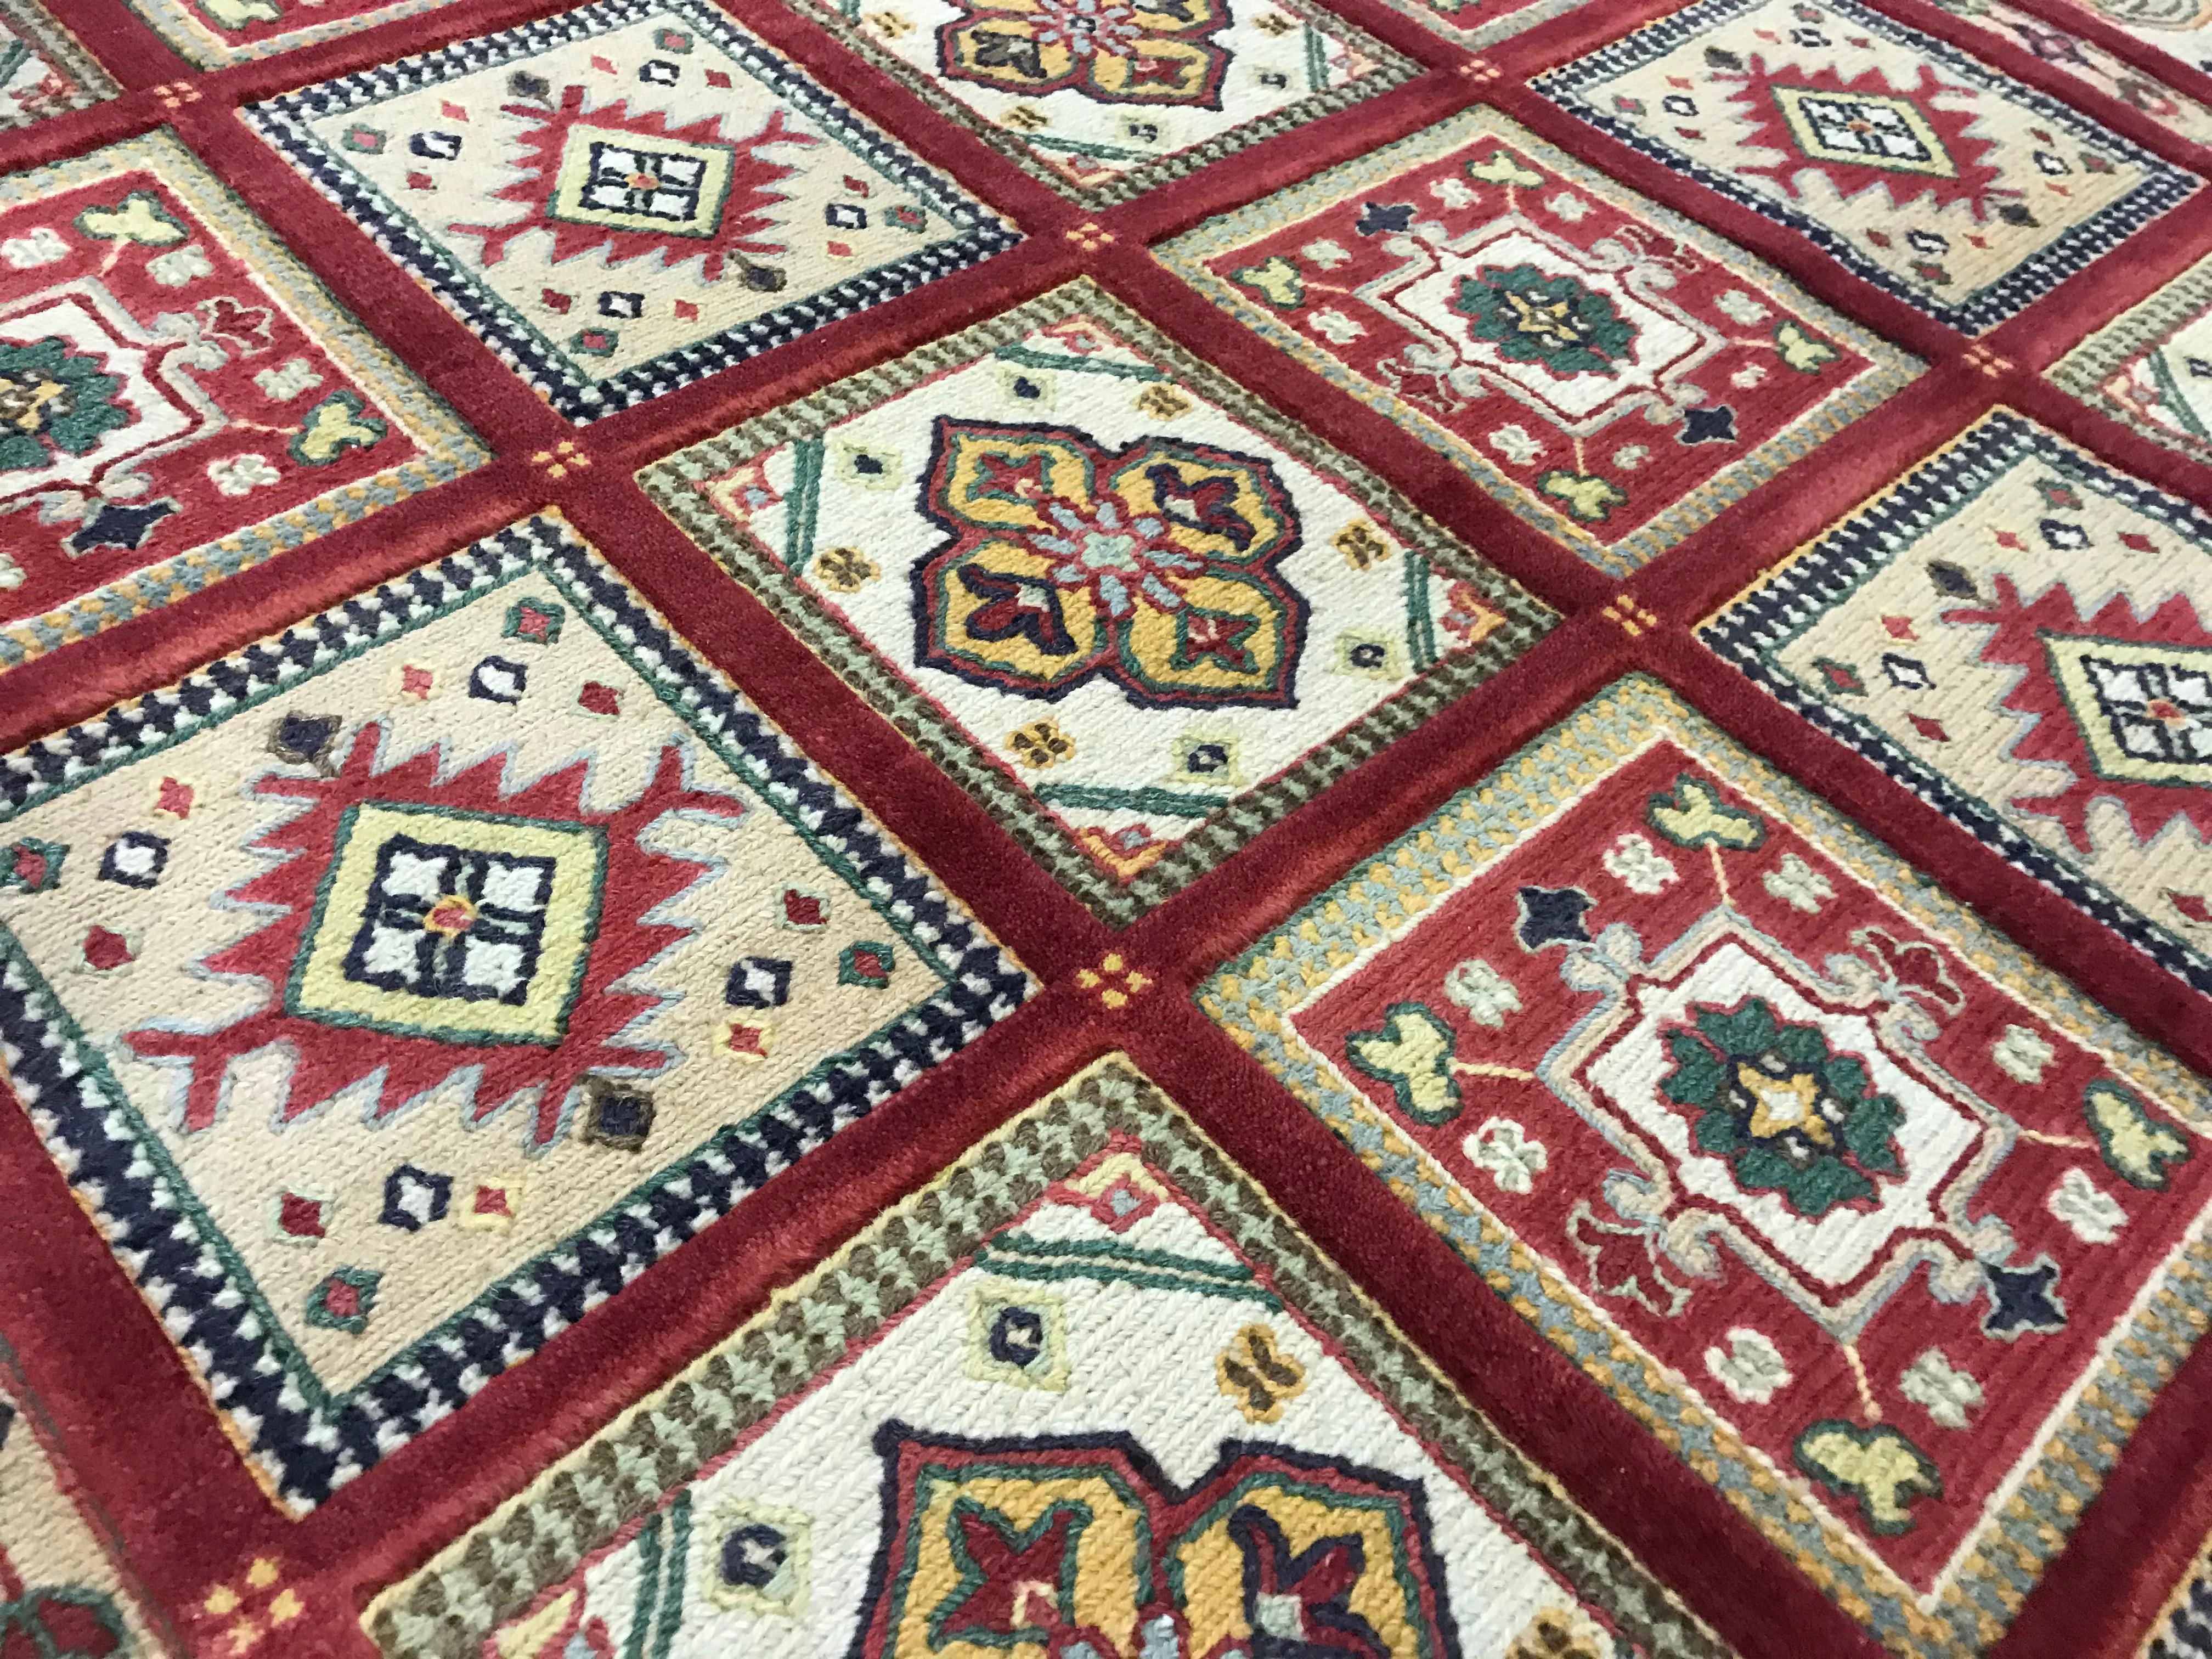 4x6 rugs